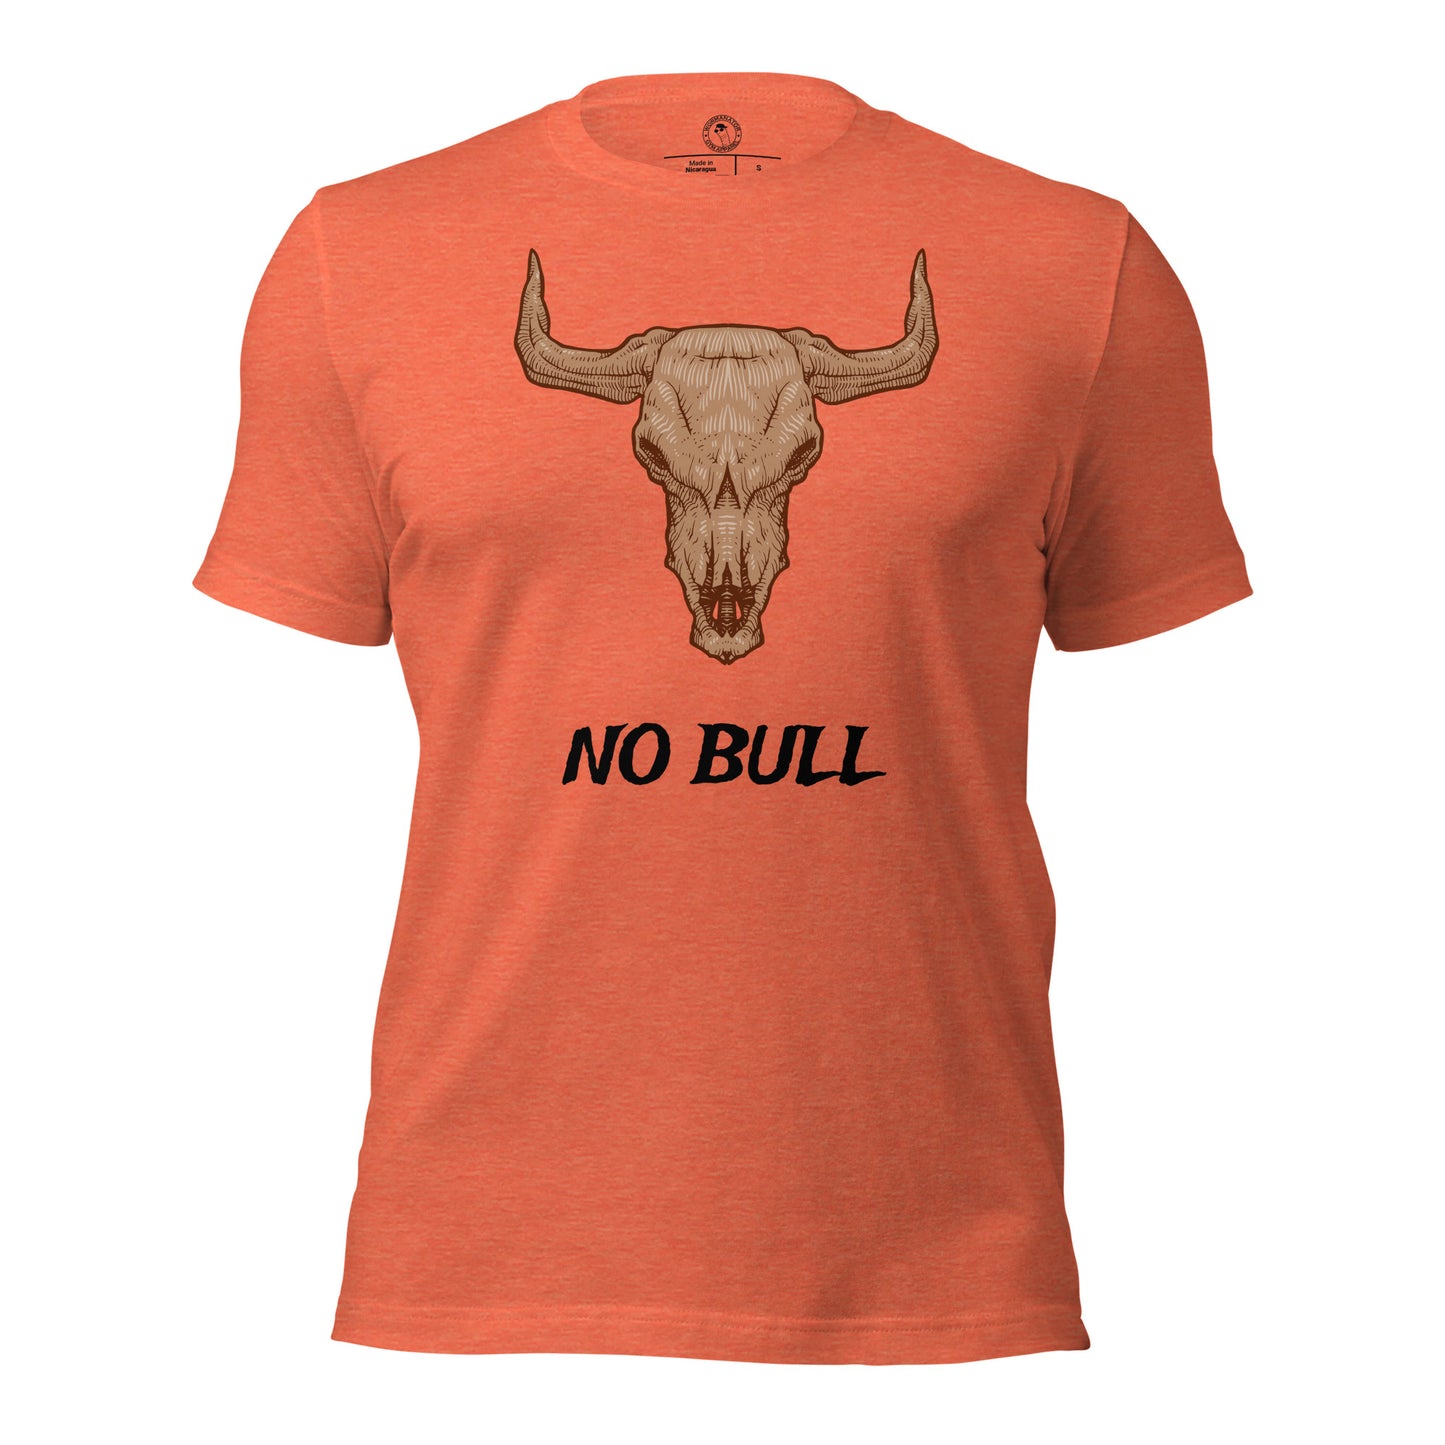 No Bull Shirt in Heather Orange